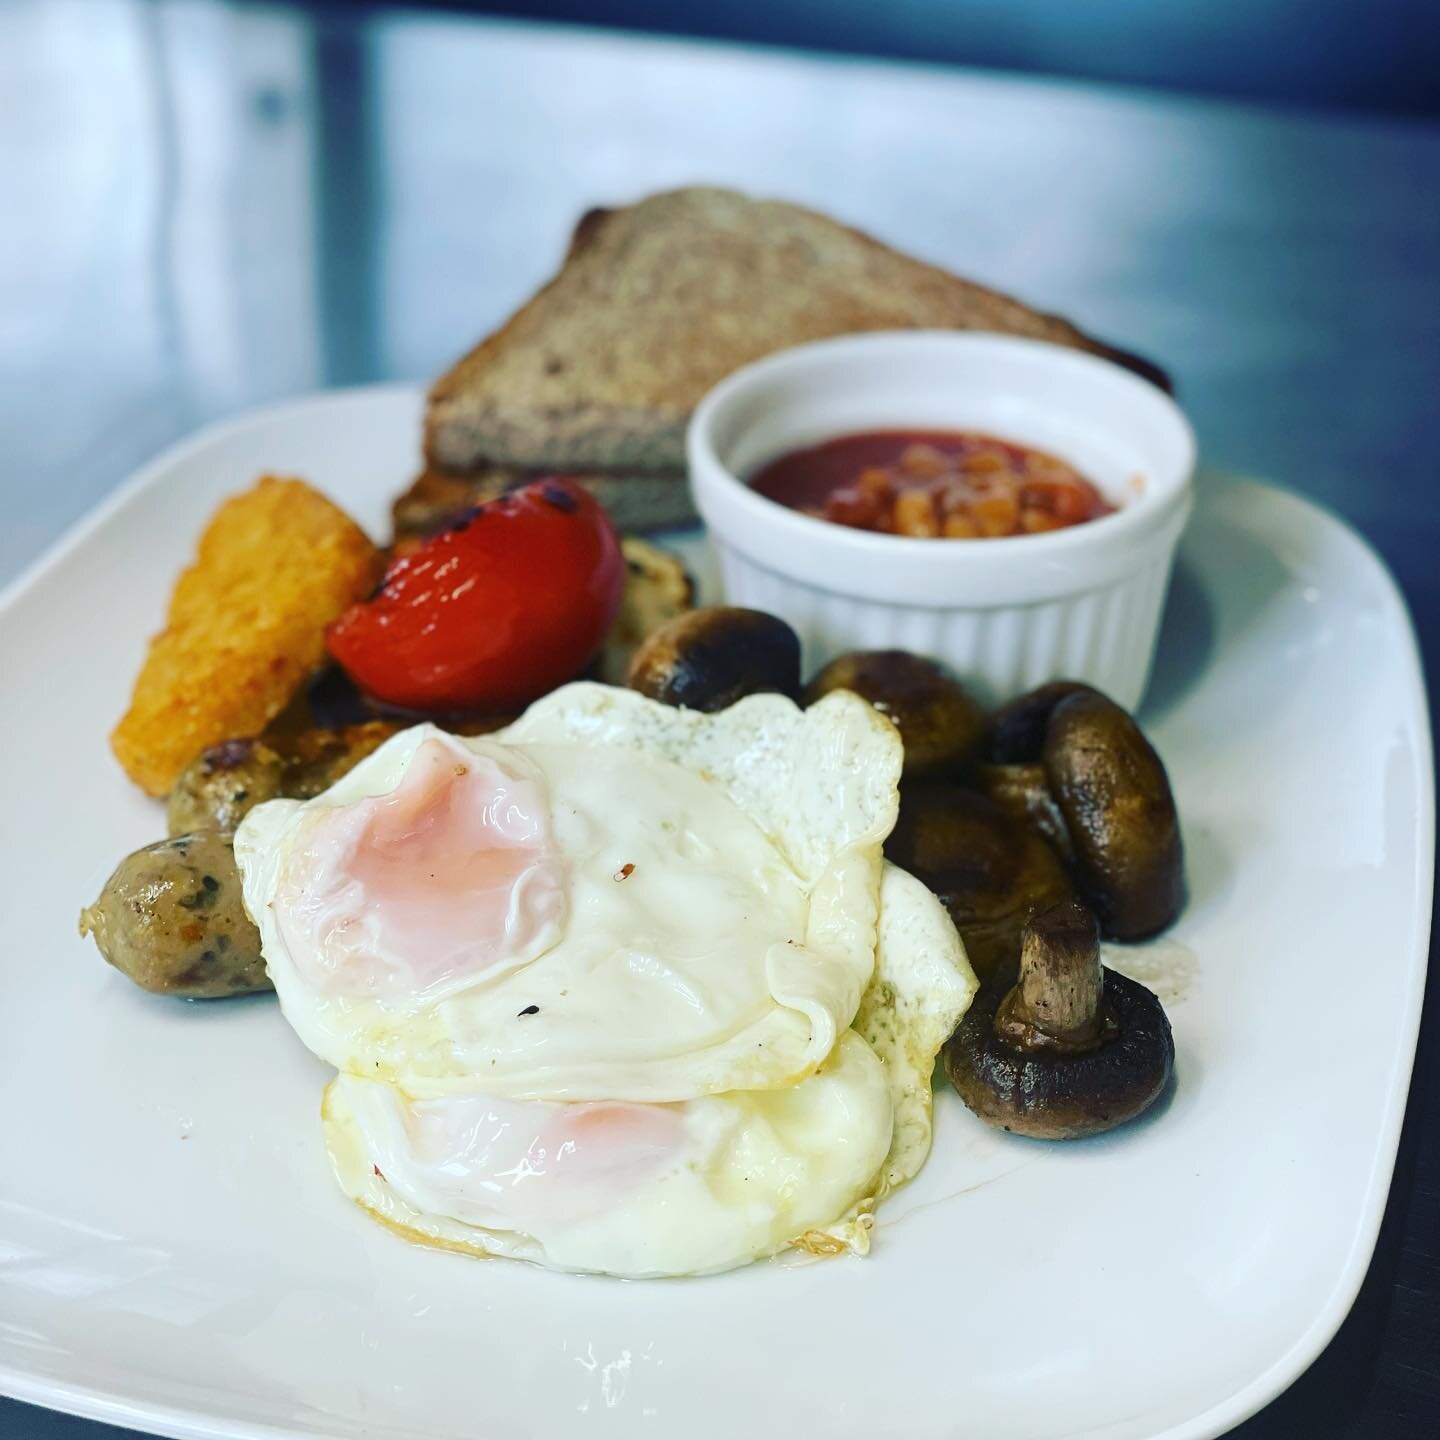 THE VEGGIE
-
Undisputed champion 

#foodie #breakfast #goodmorning #allday #bromley #coffee #restaurant